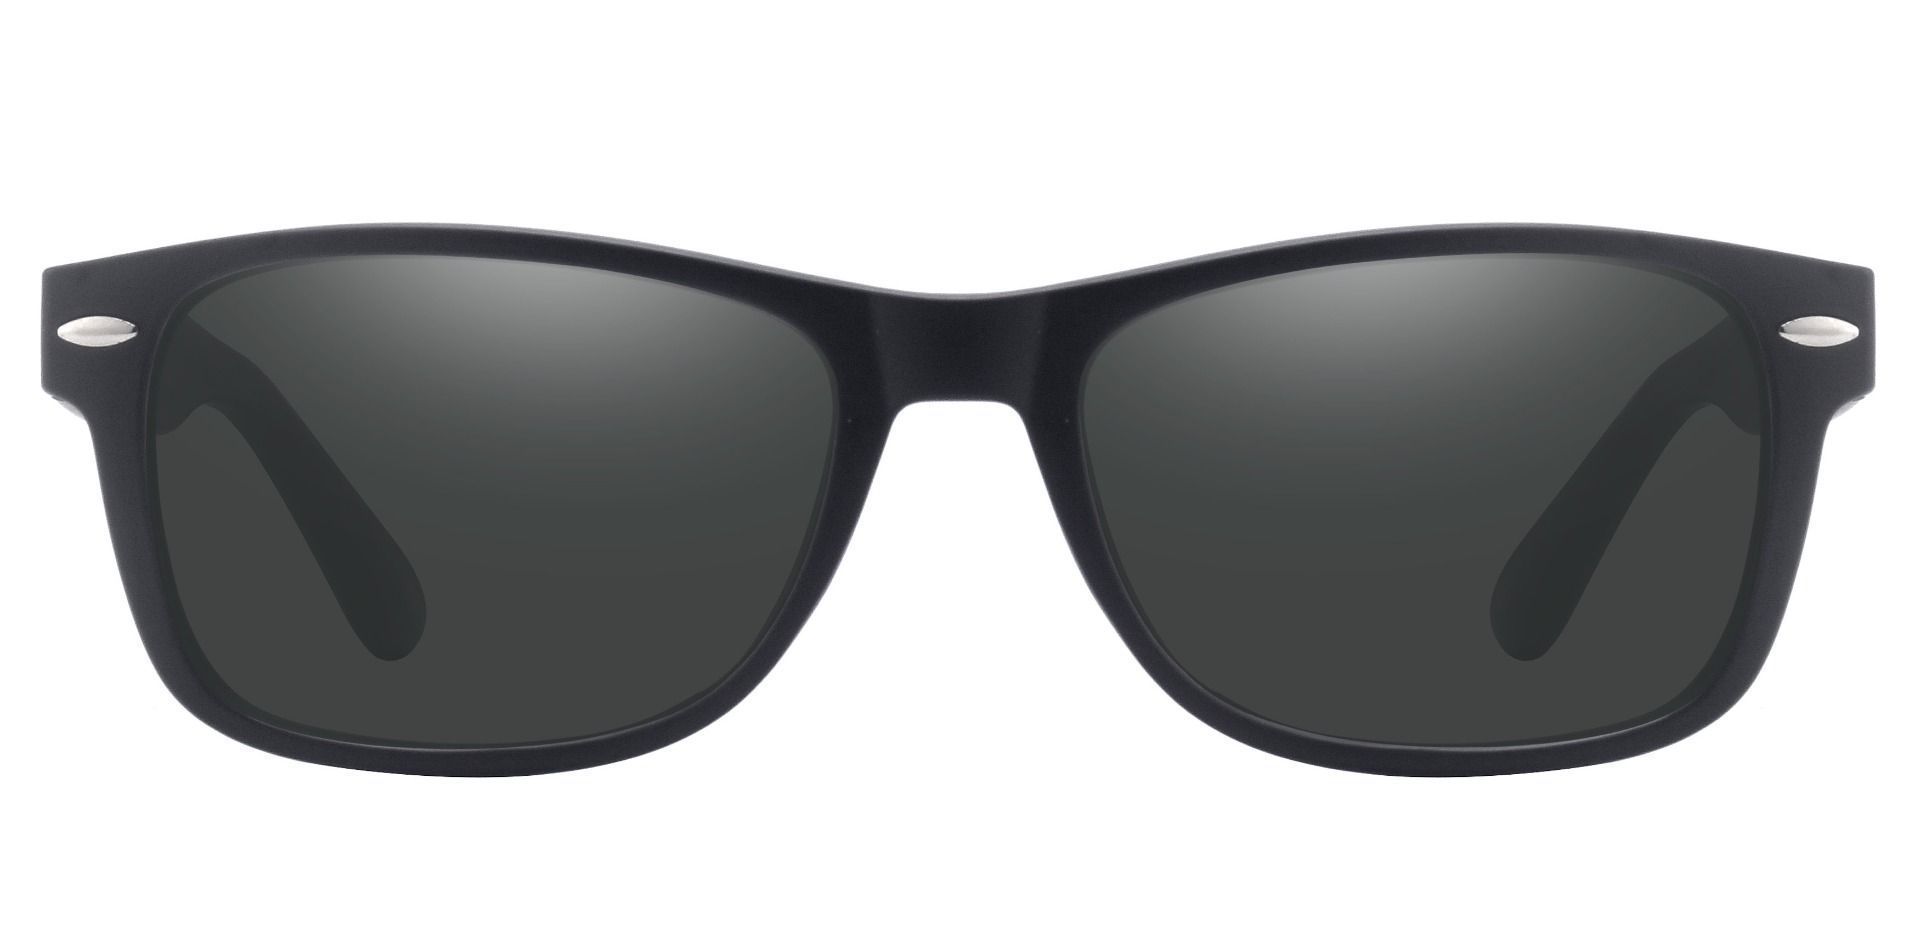 Kent Rectangle Non-Rx Sunglasses - Black Frame With Gray Lenses